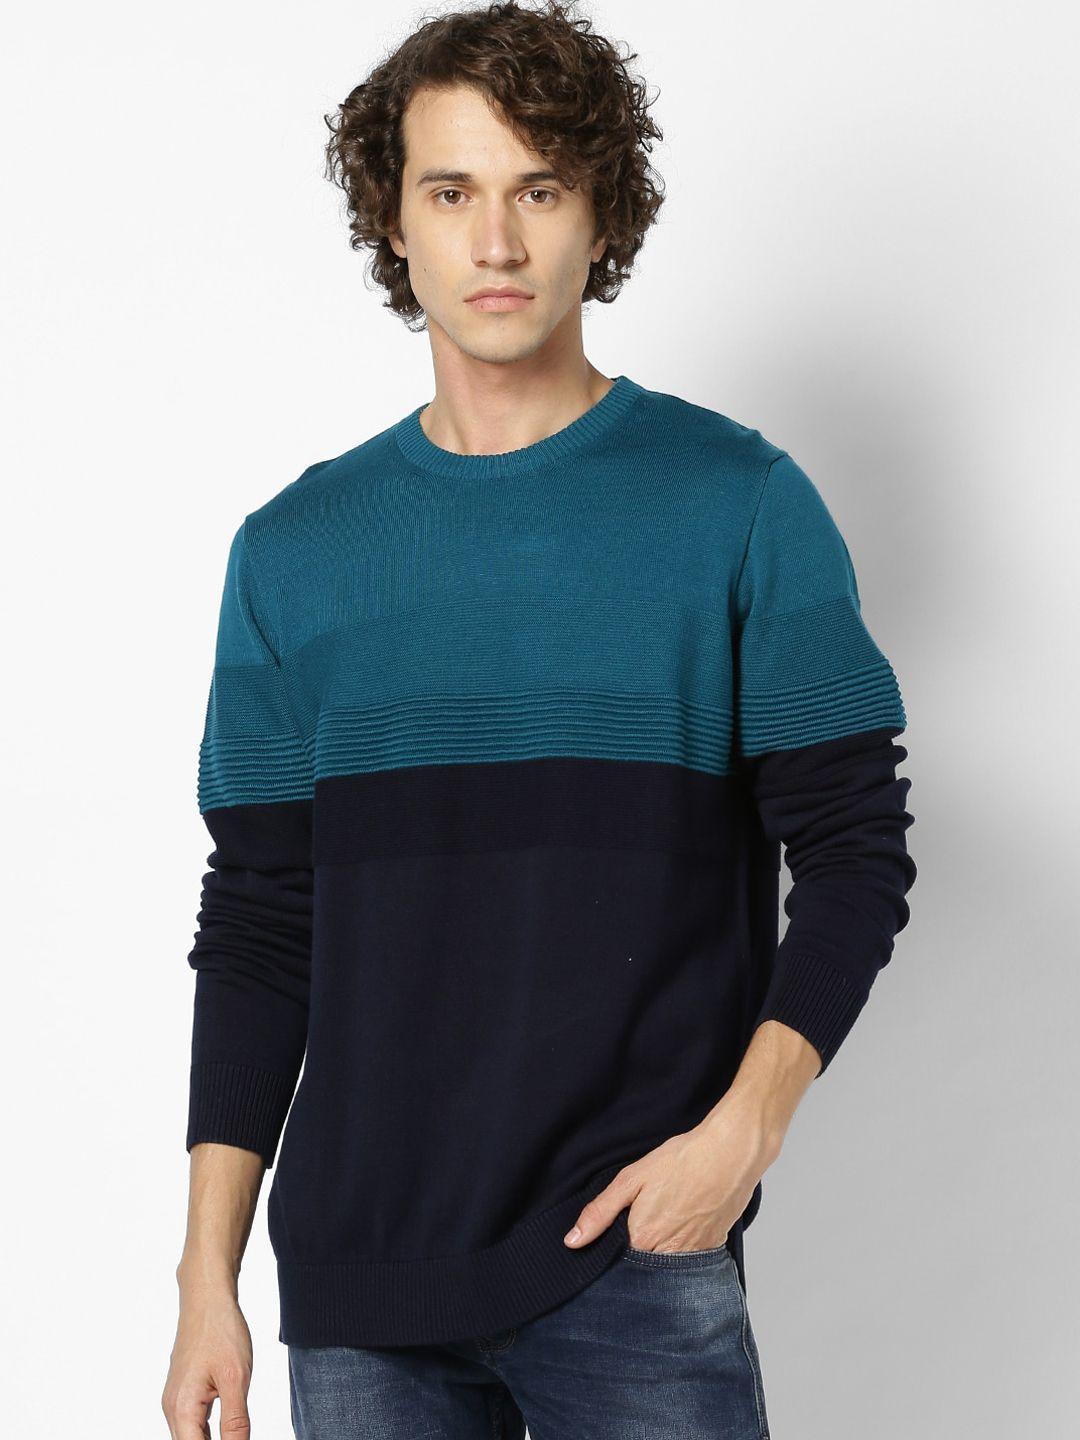 celio-men-teal-blue-&-navy-blue-colourblocked-pullover-sweater